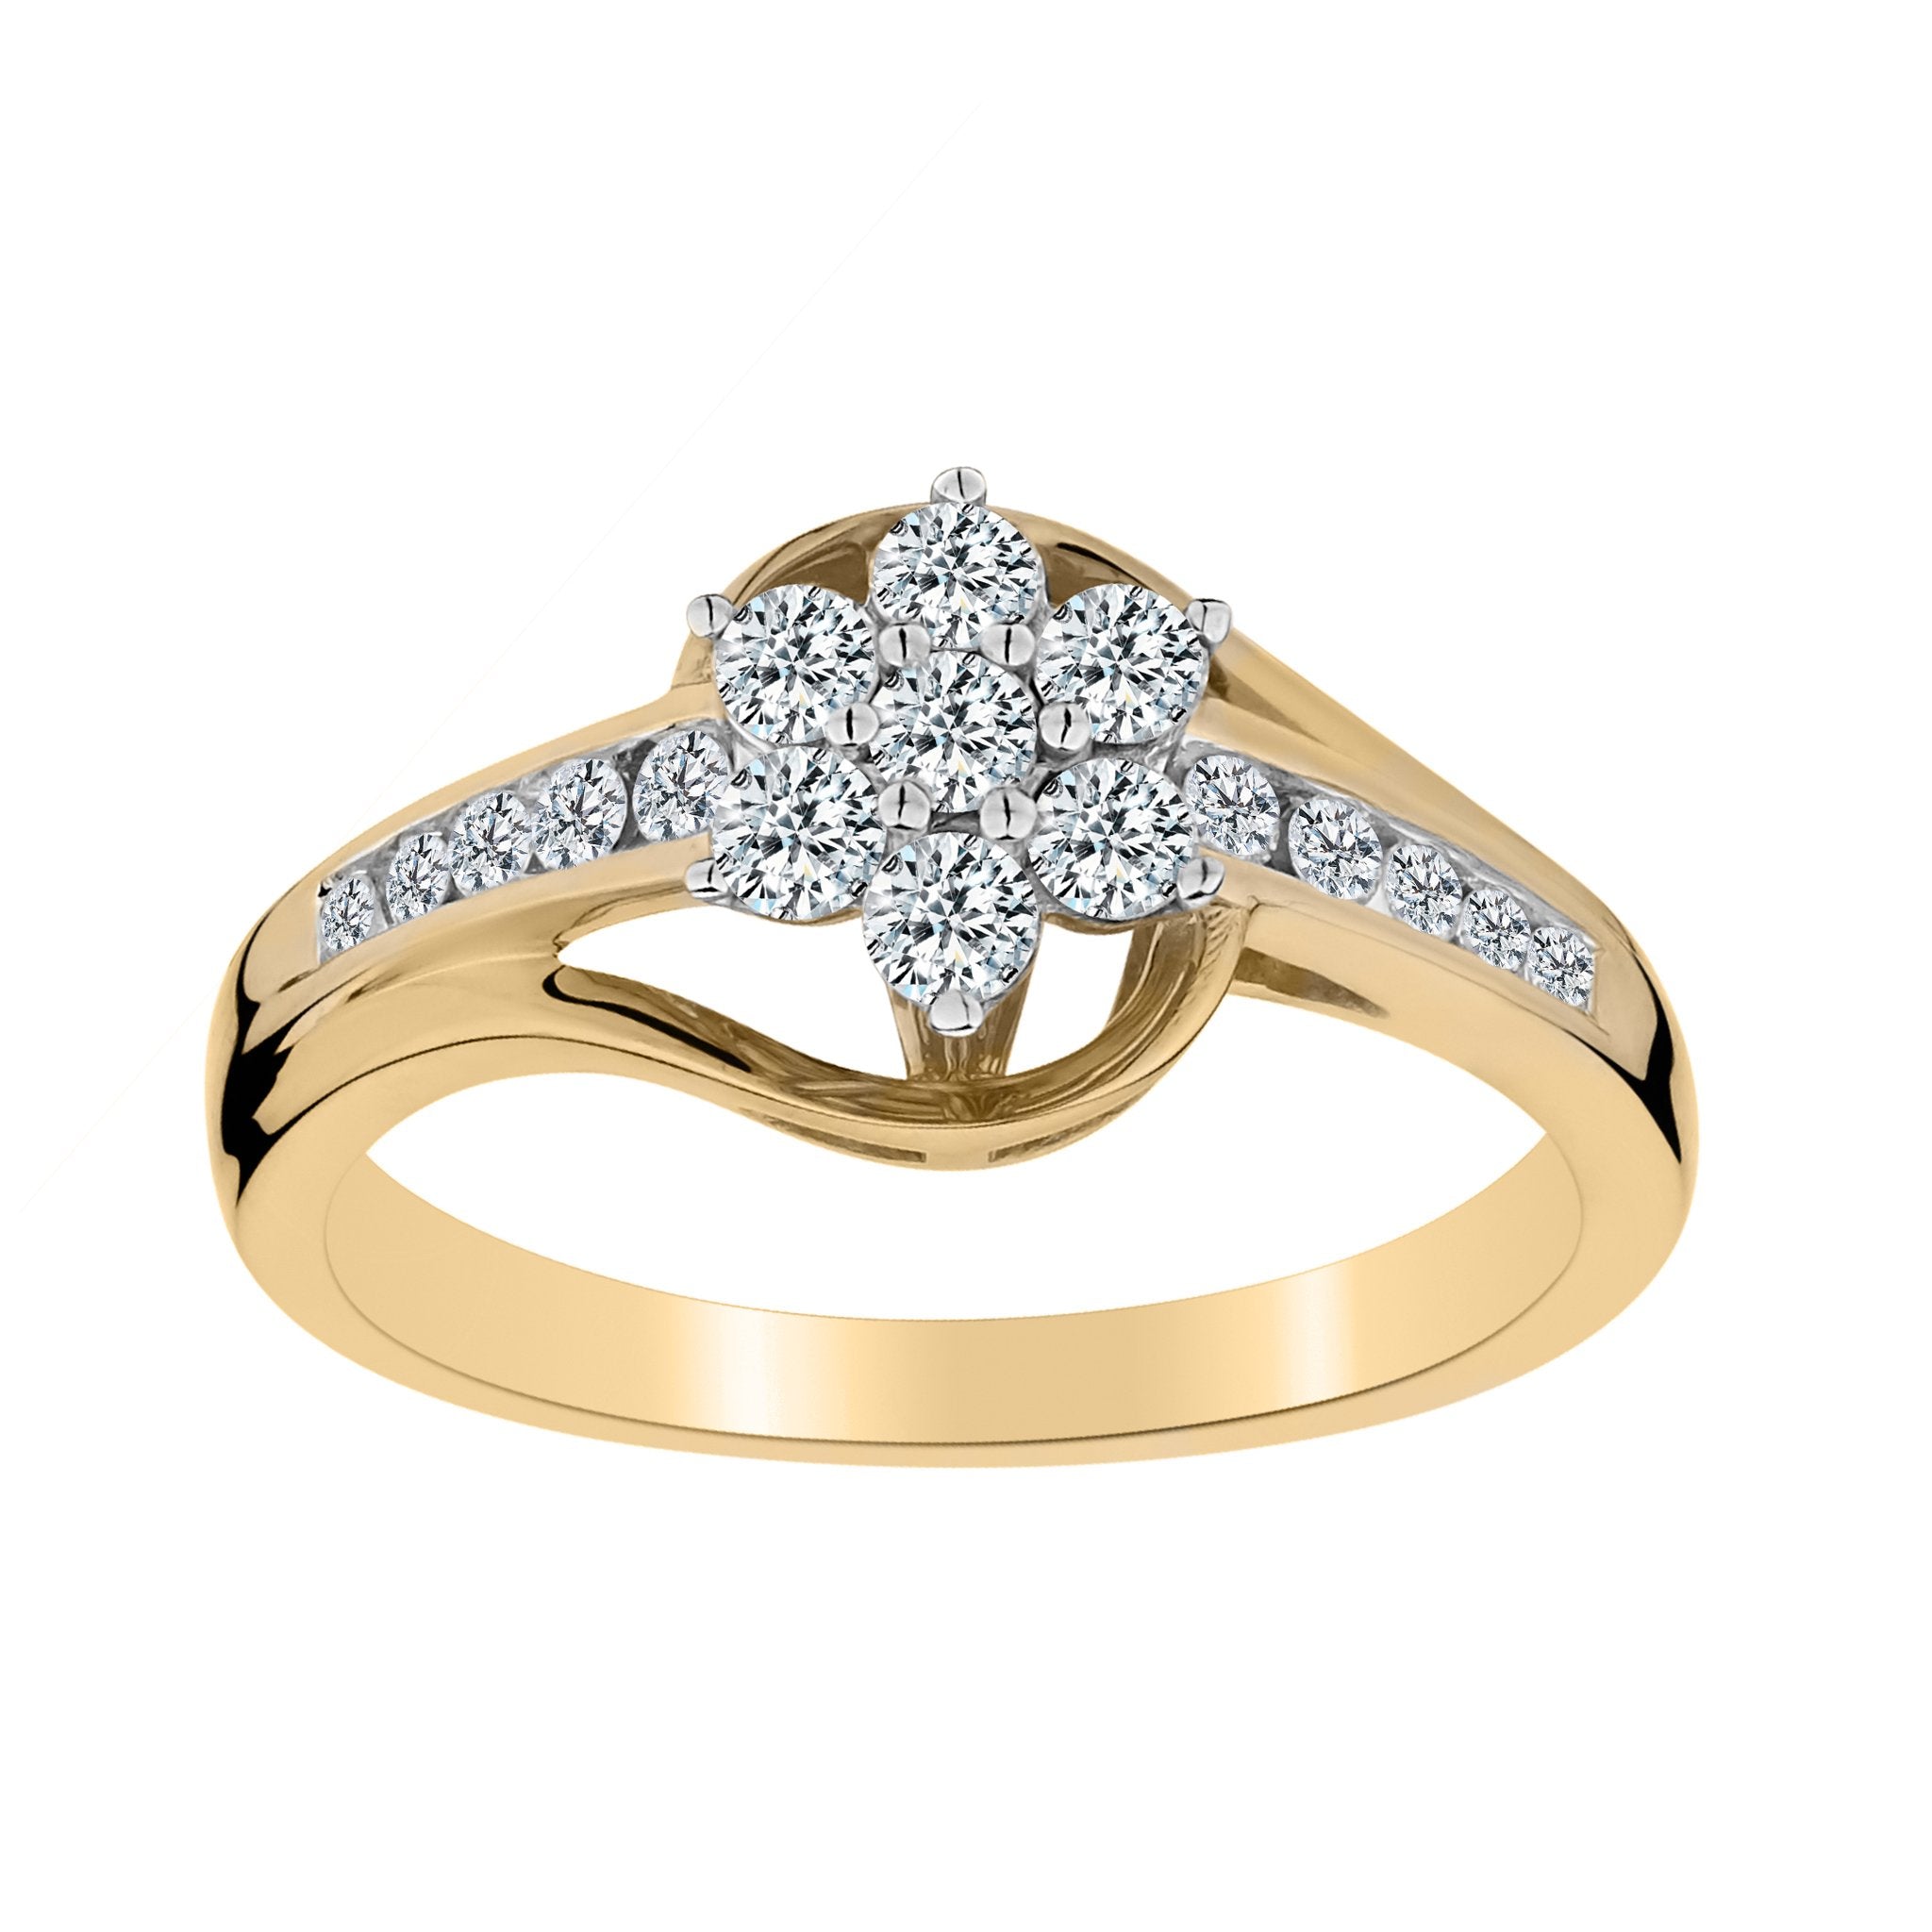 .50 CARAT DIAMOND FLOWER RING, 10kt YELLOW GOLD - Griffin Jewellery Designs